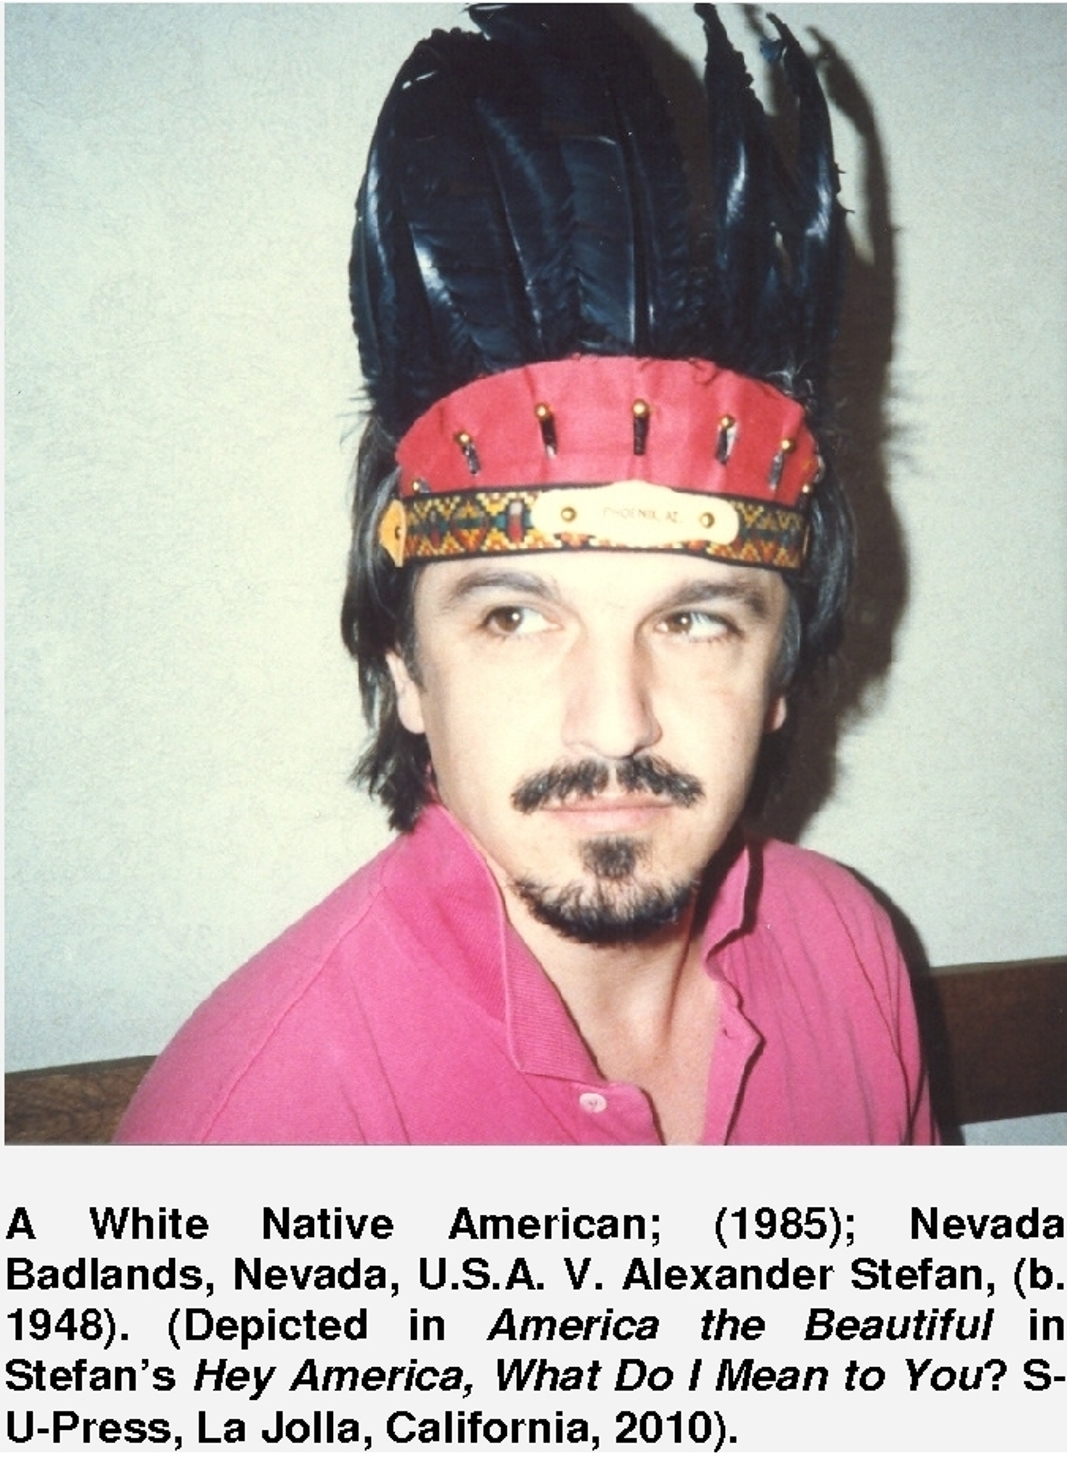 A White Native American; (1985); Nevada Badlands, Nevada, U.S.A. V. Alexander Stefan, (b. 1948). (Depicted in America the Beautiful in Stefans Hey America, What Do I Mean to You? S-U-Press, La Jolla, California, 2010).